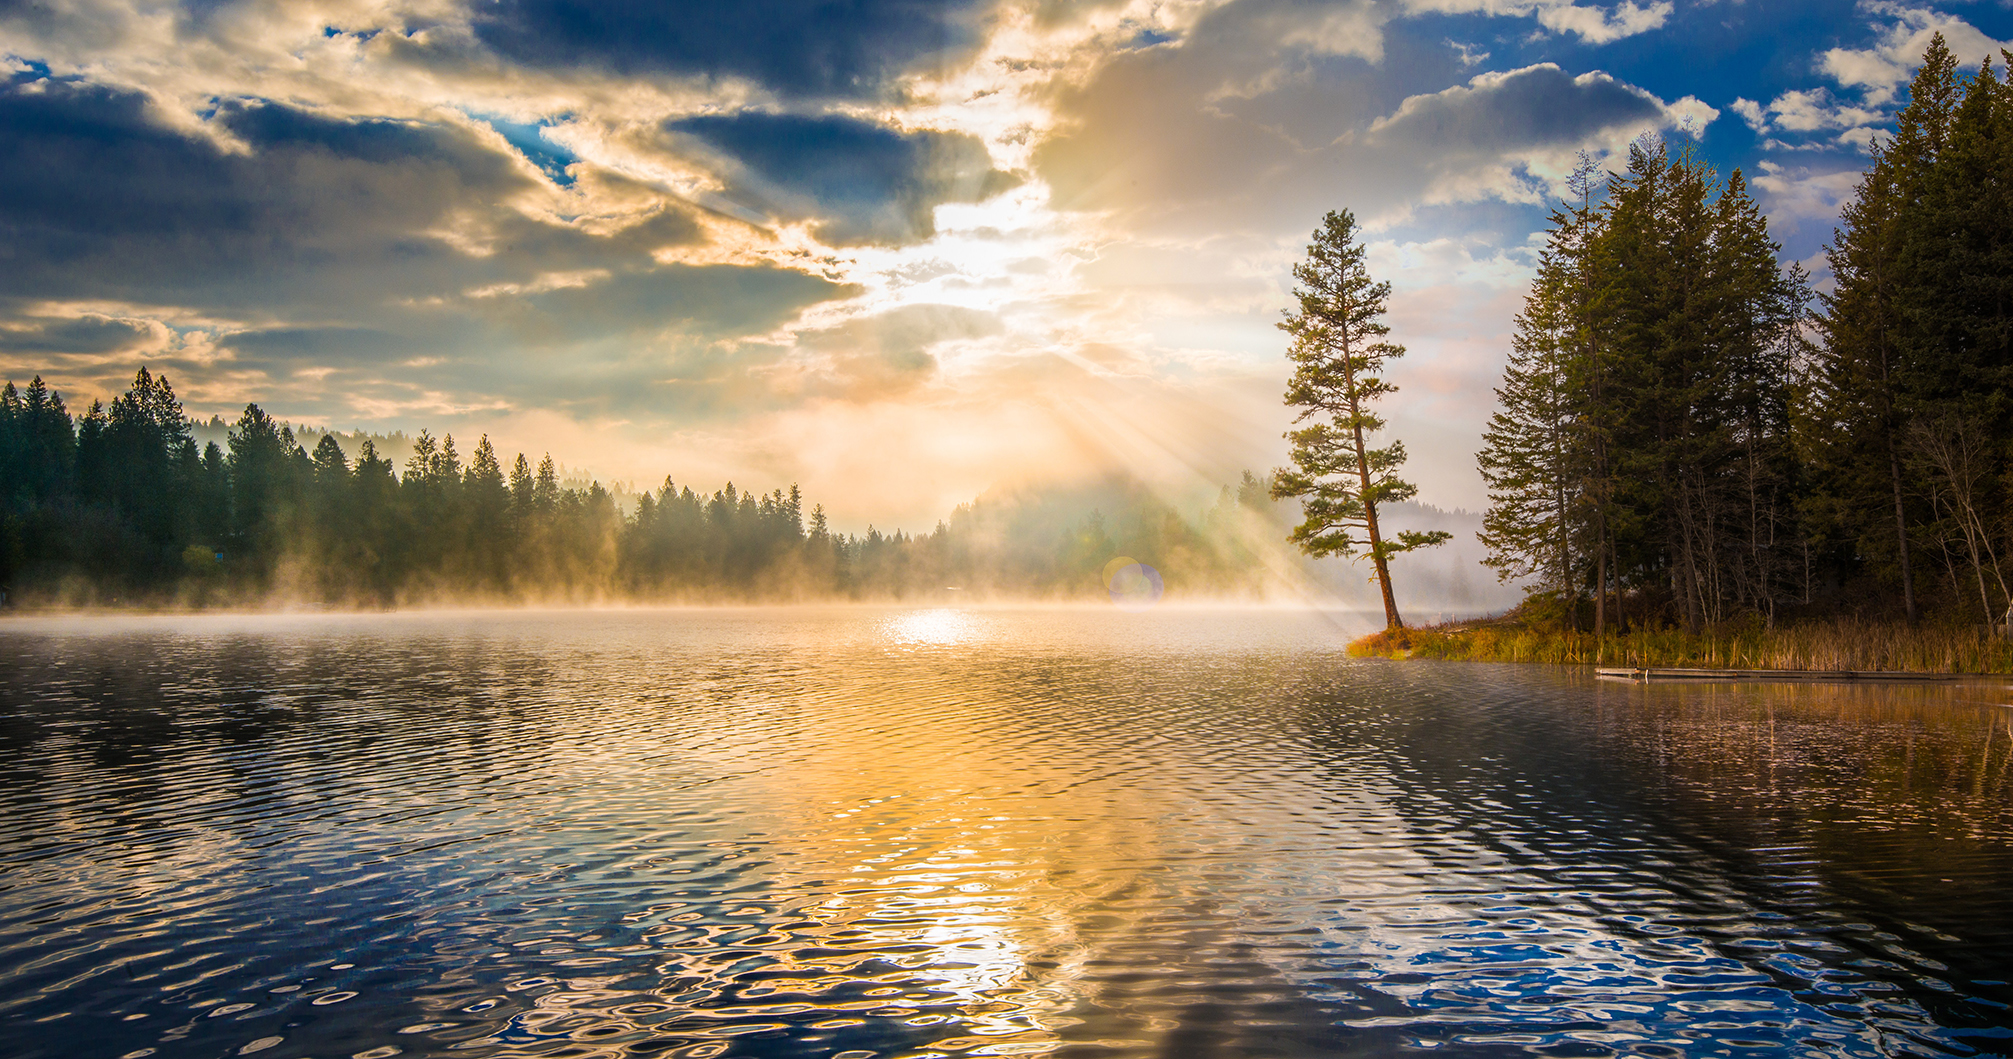 Pine tree reflect in lake in morning light.